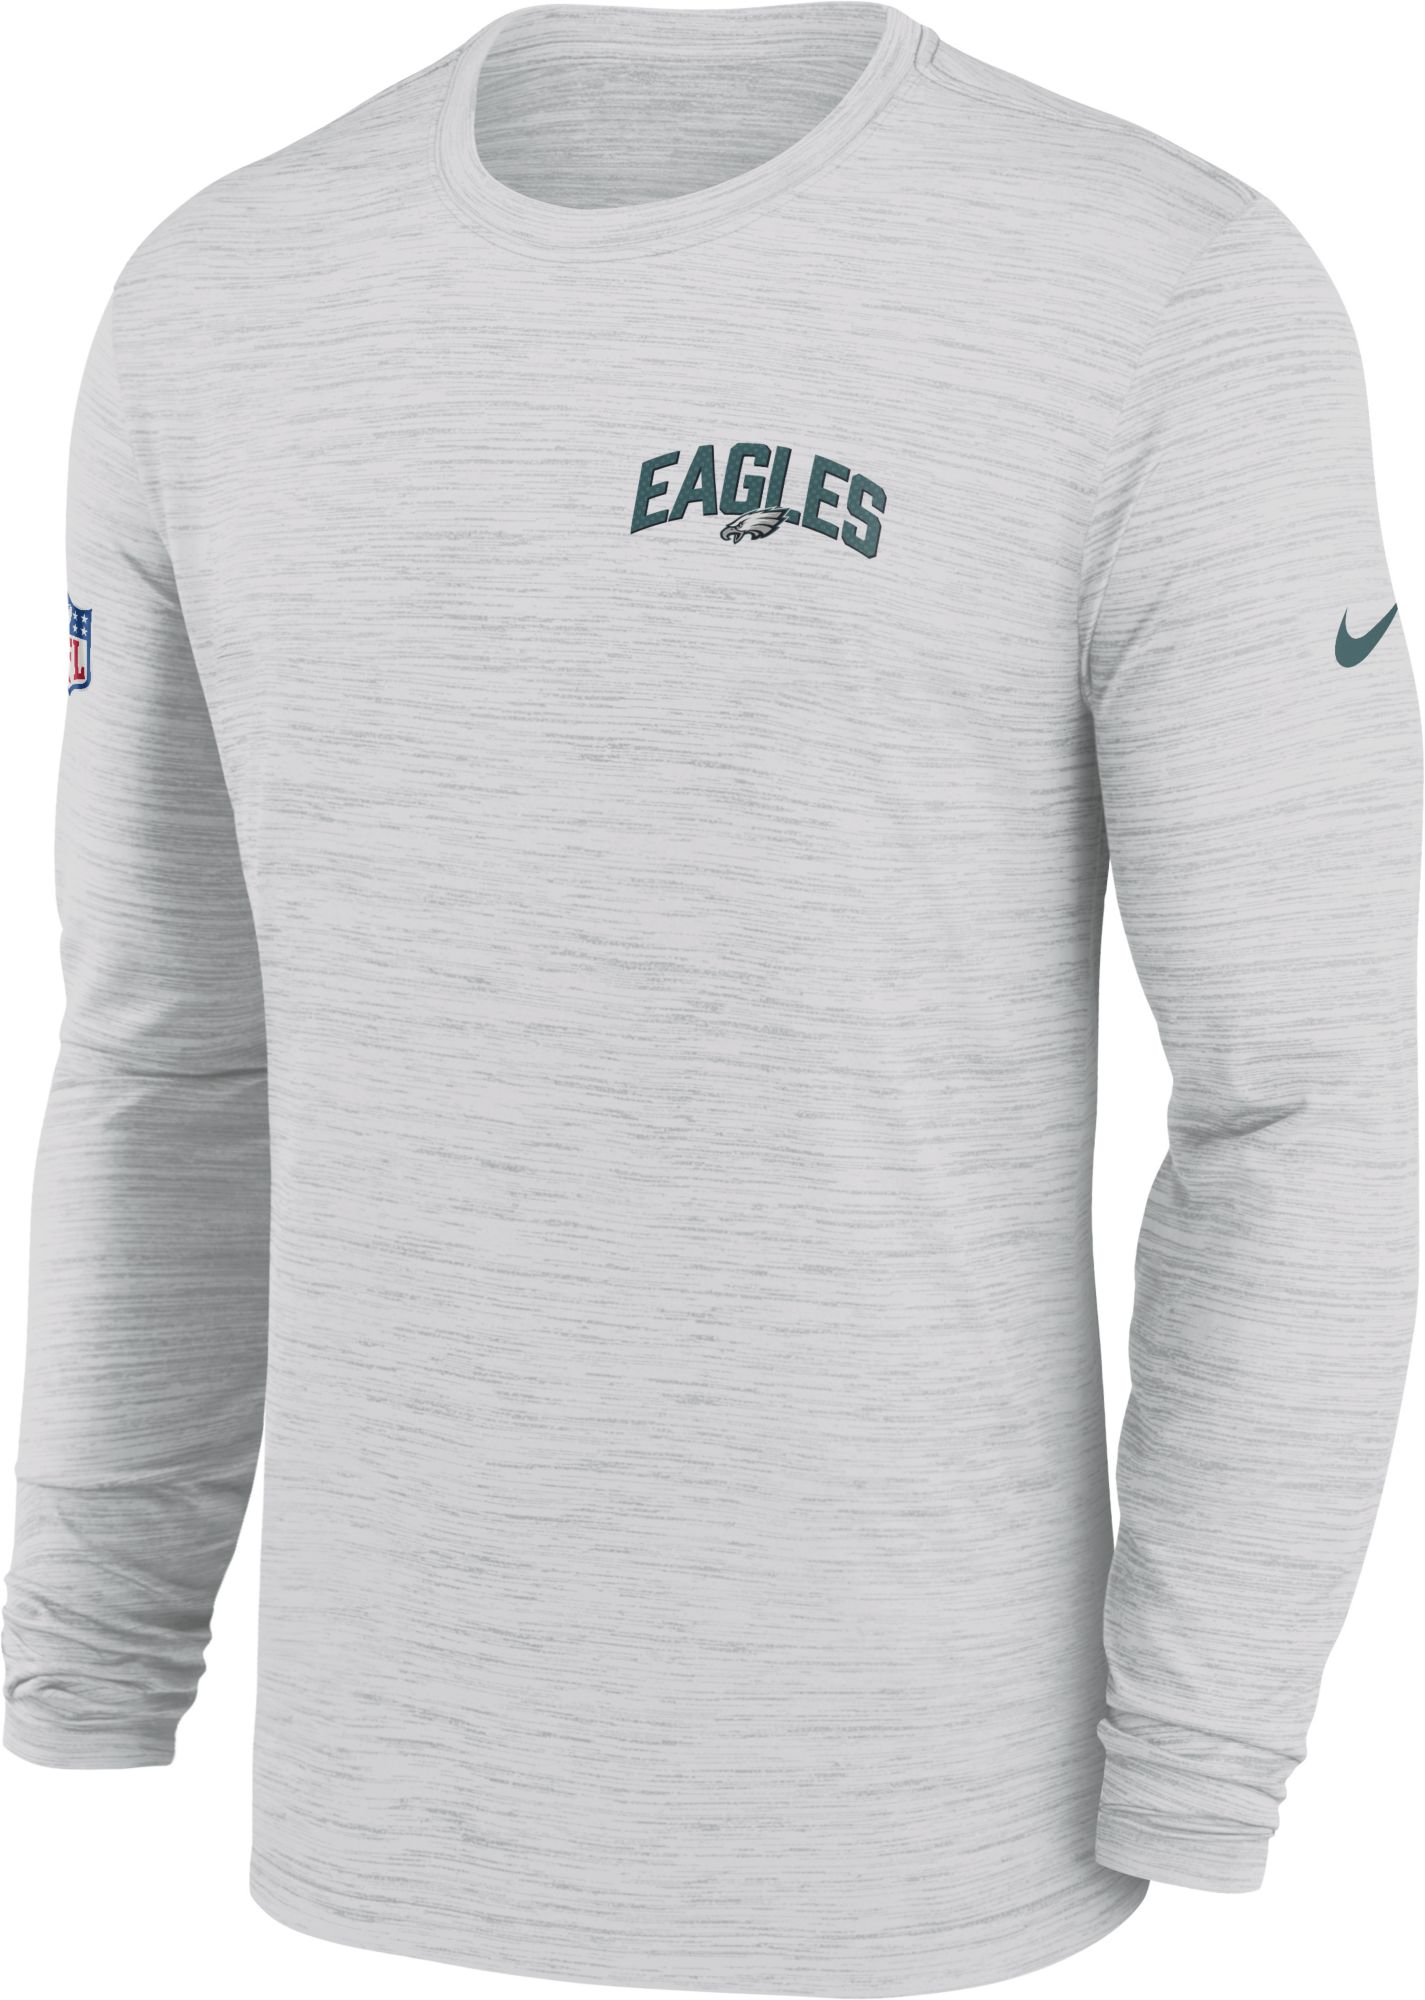 Philadelphia Eagles NFL Team Apparel - Sideline Essential T-Shirt